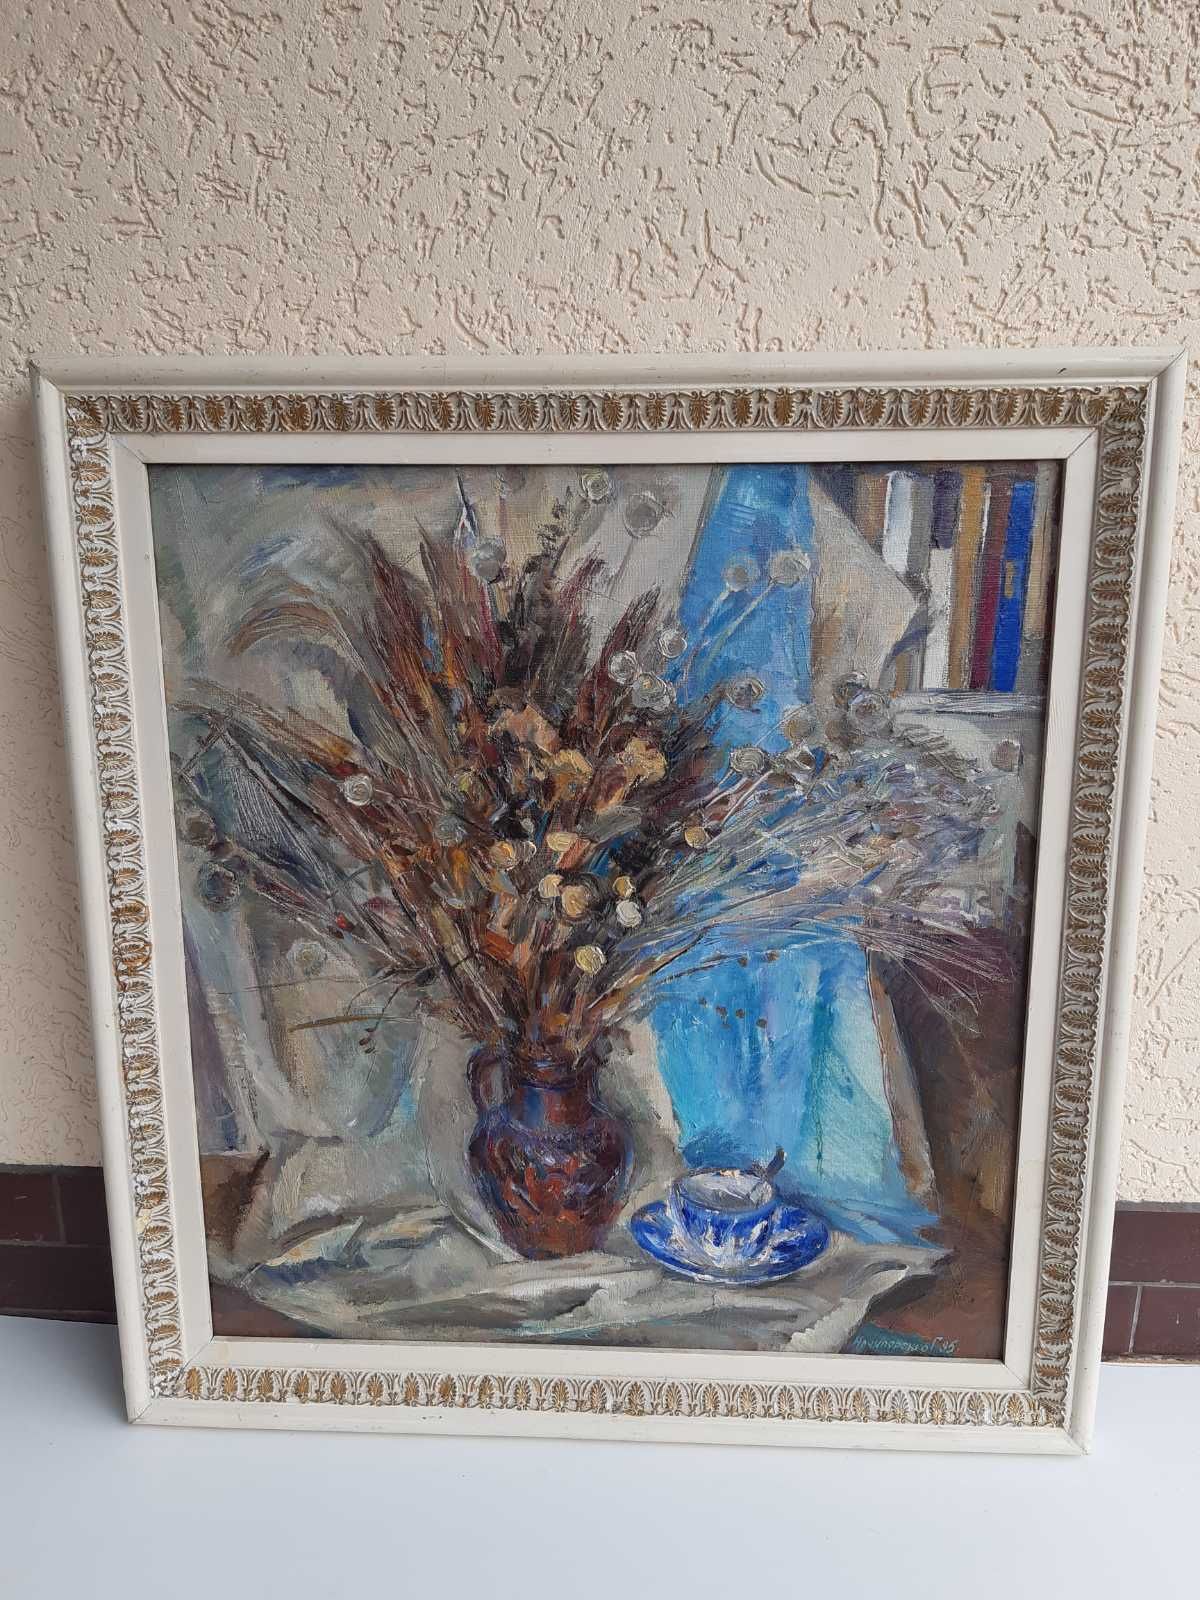 Картина Генриха Нечипоренко "Сирень". 1998год. 65х60см.Холст, масло.